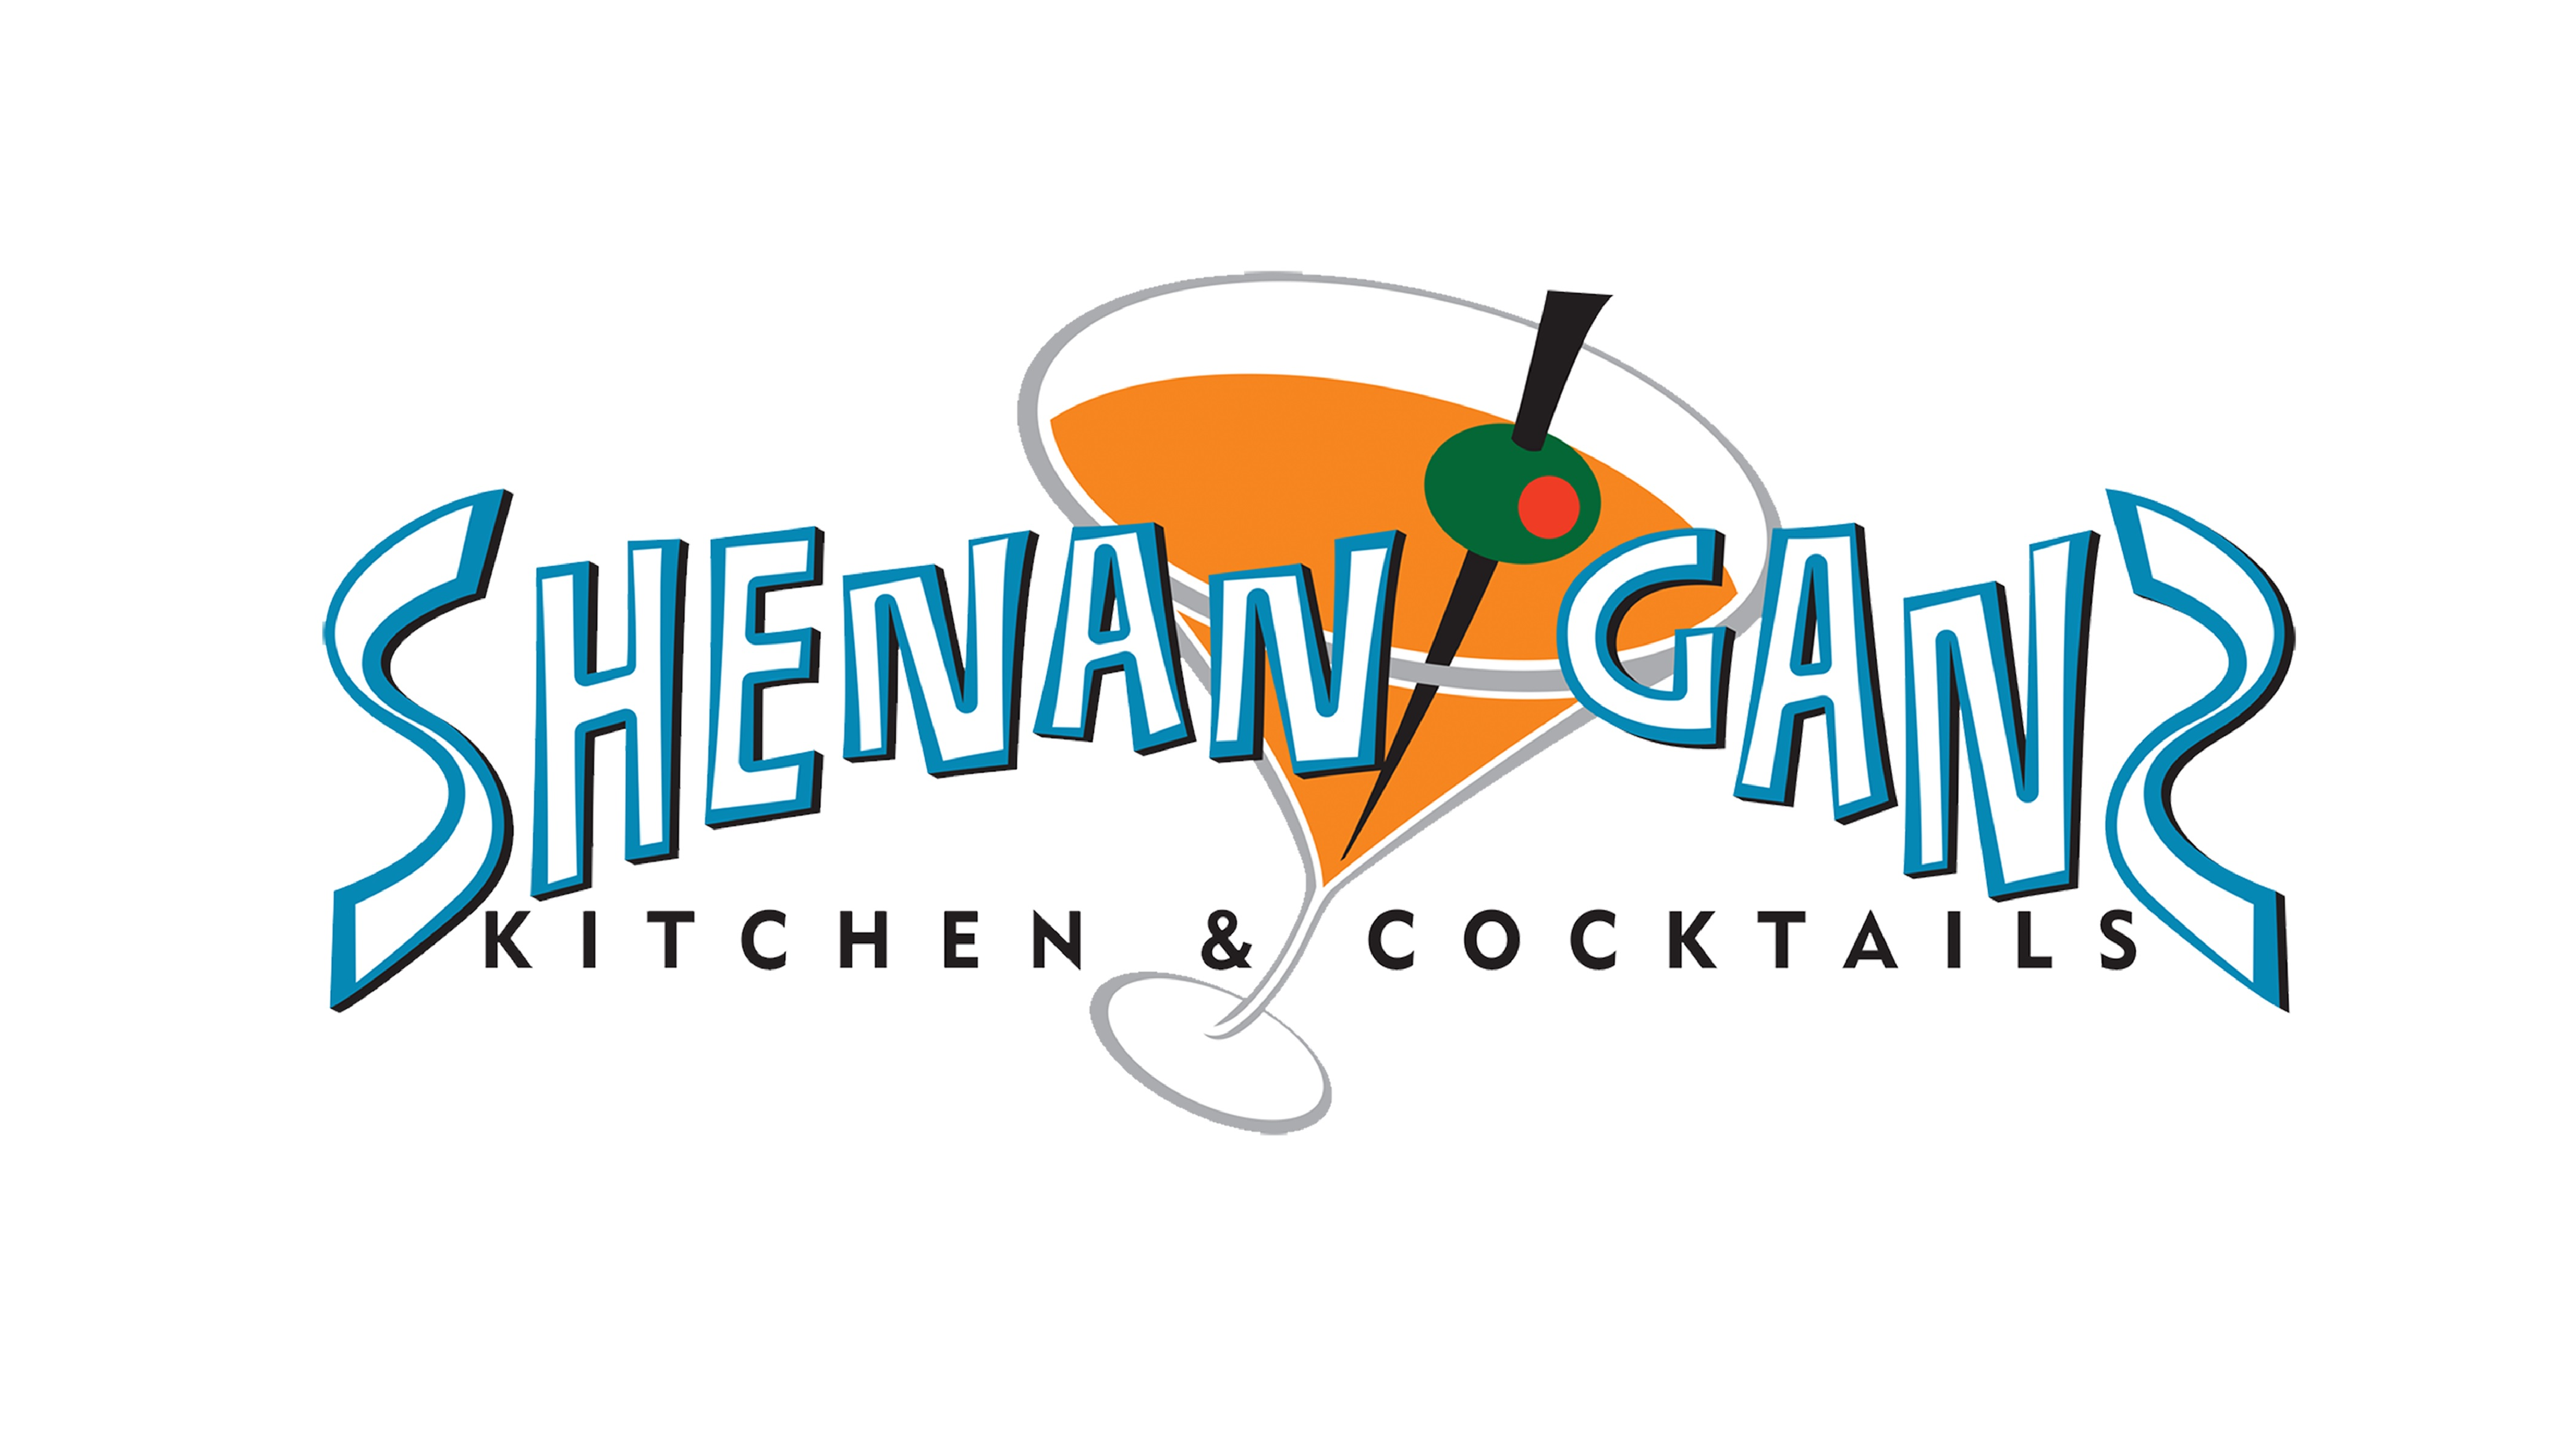 Shenanigans - Kitchen & Cocktails + Events